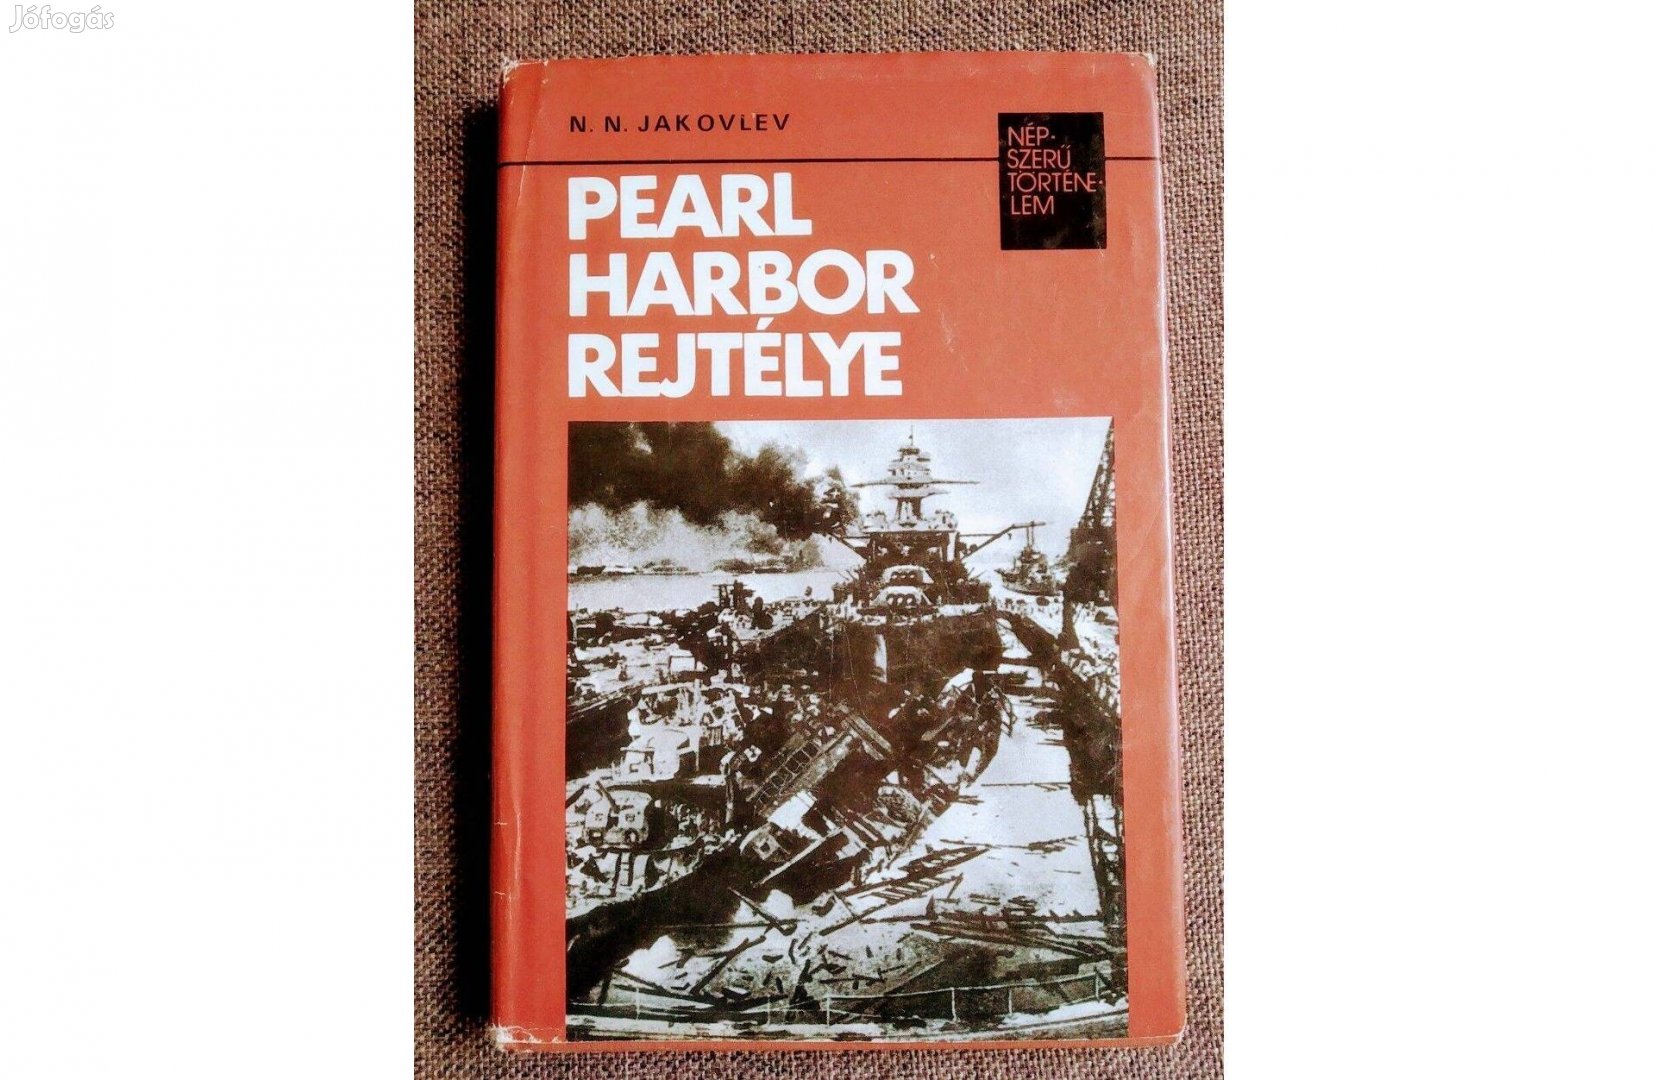 Pearl Harbor rejtélye (népszerű történelem) N.N.: Jakovlev